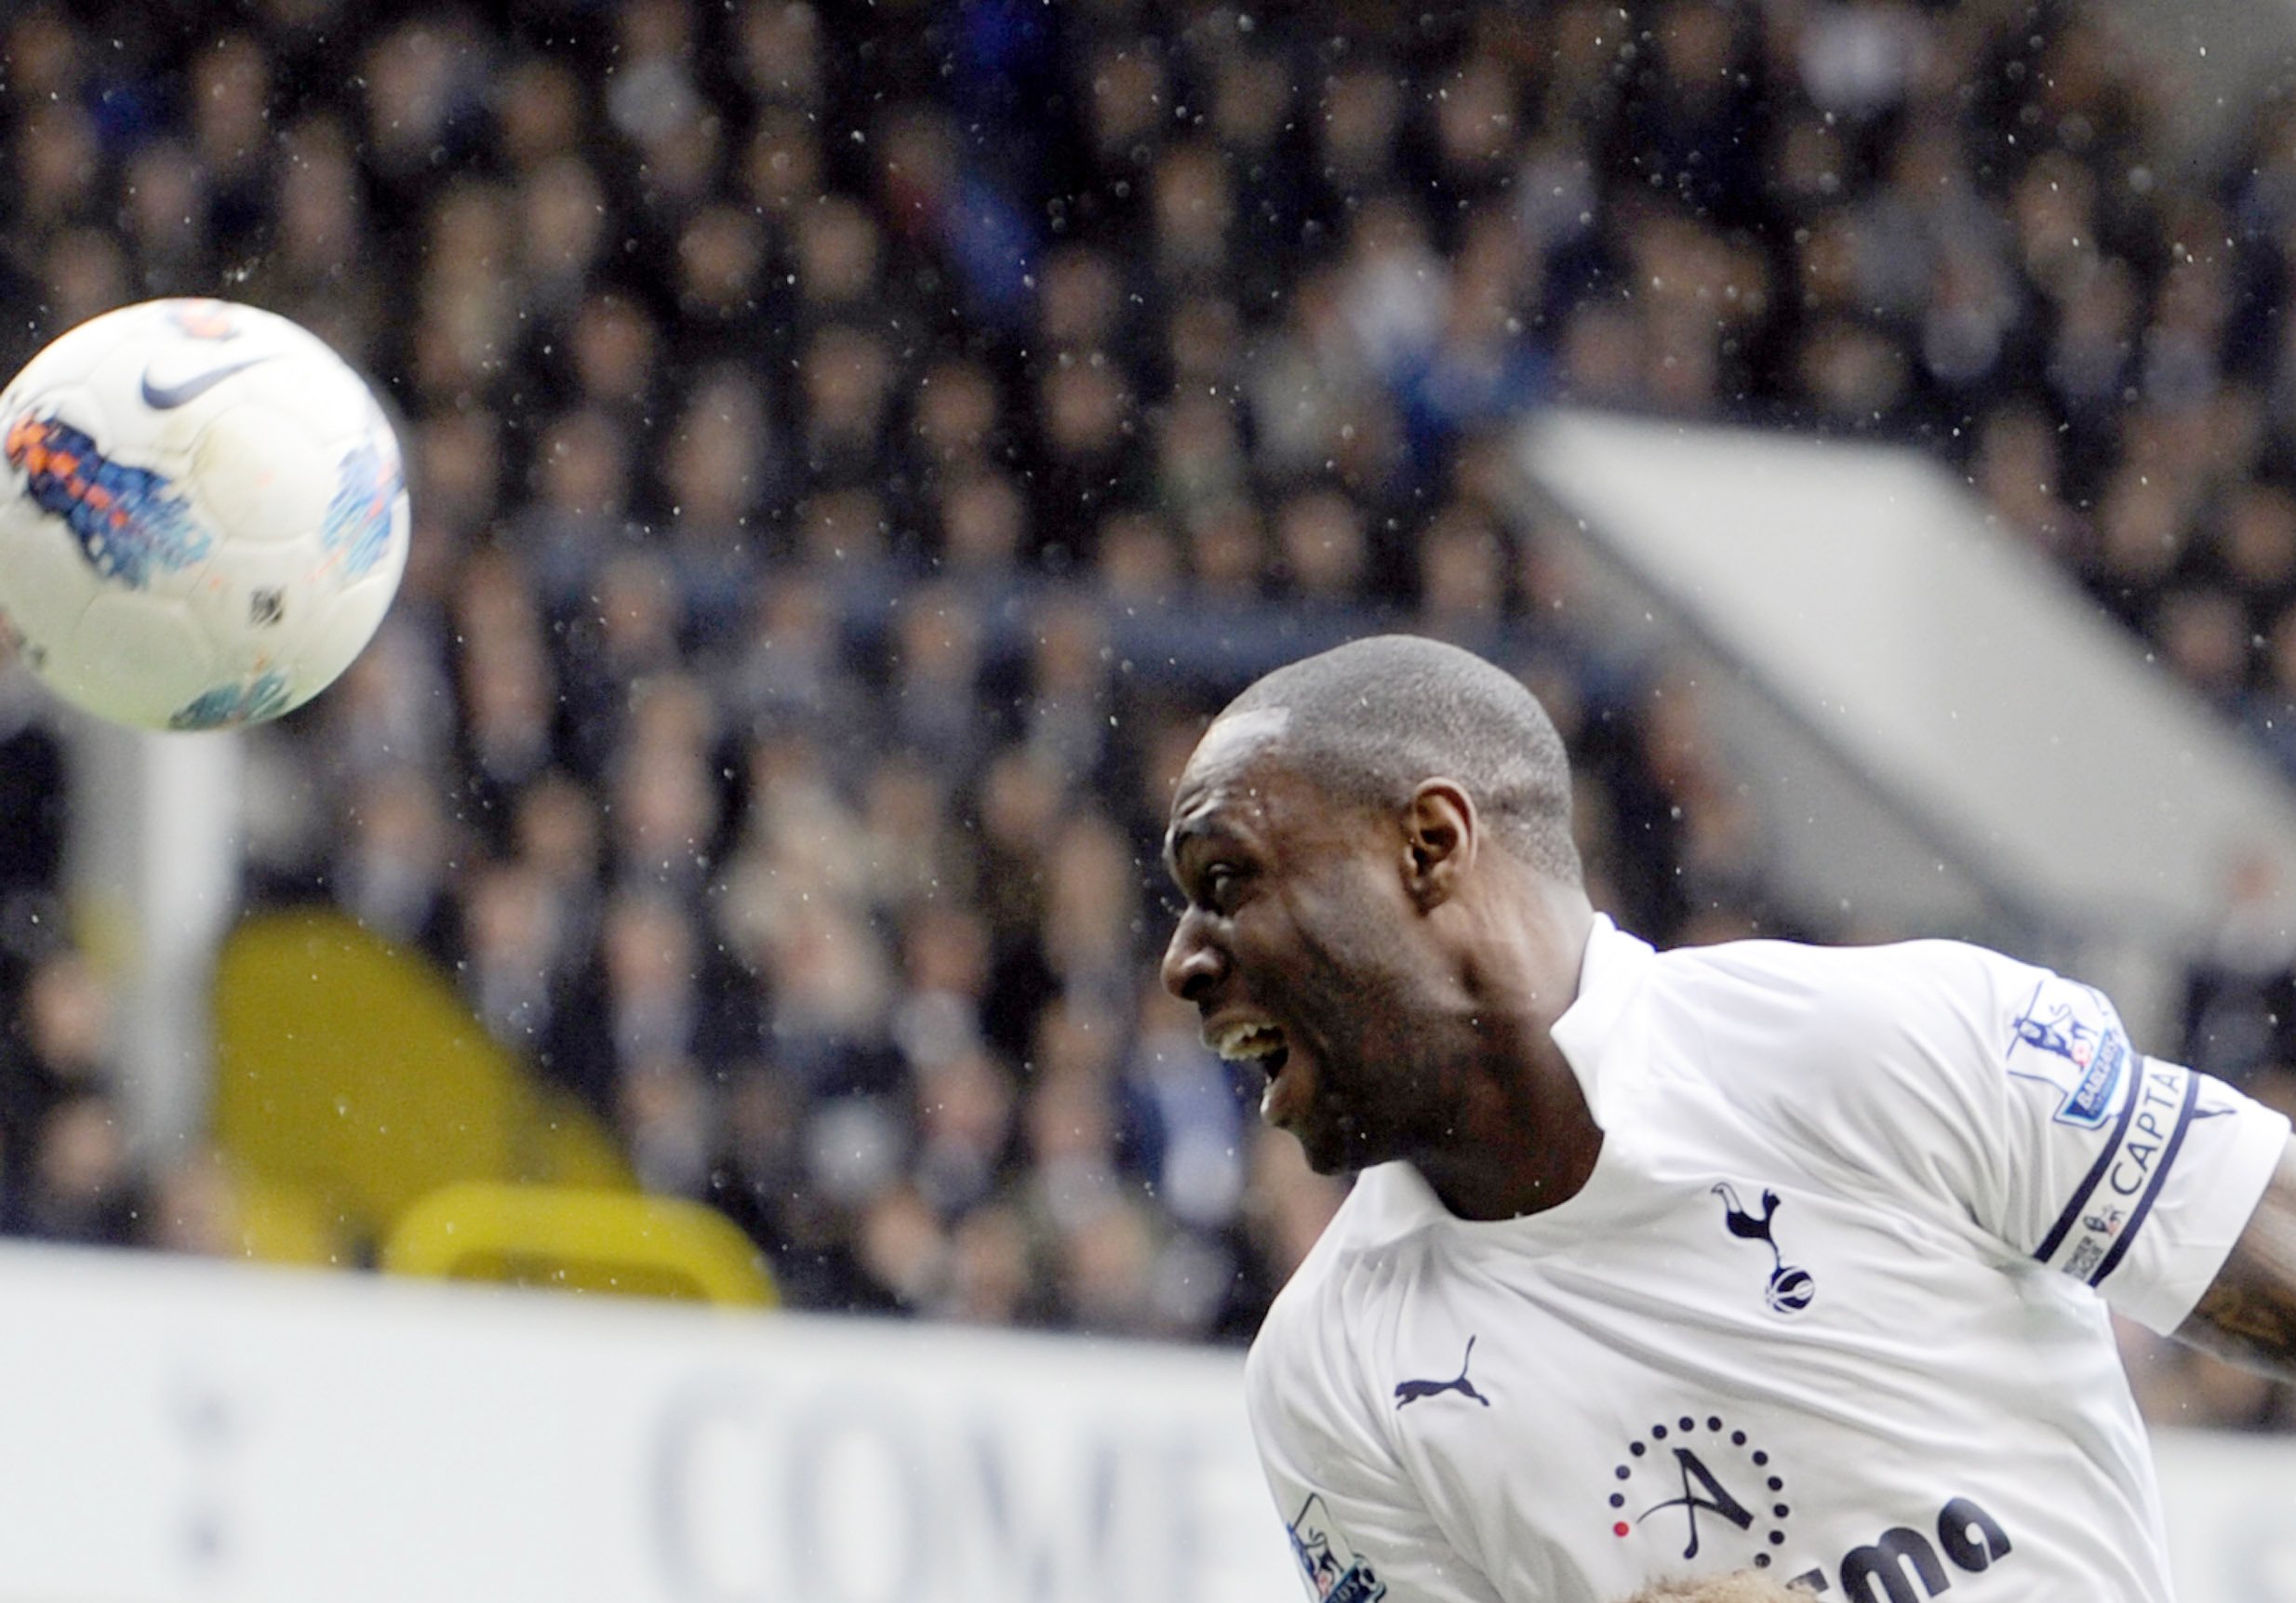 Ledley King praises Ange Postecoglou for bringing the fun back at Tottenham Hotspur .